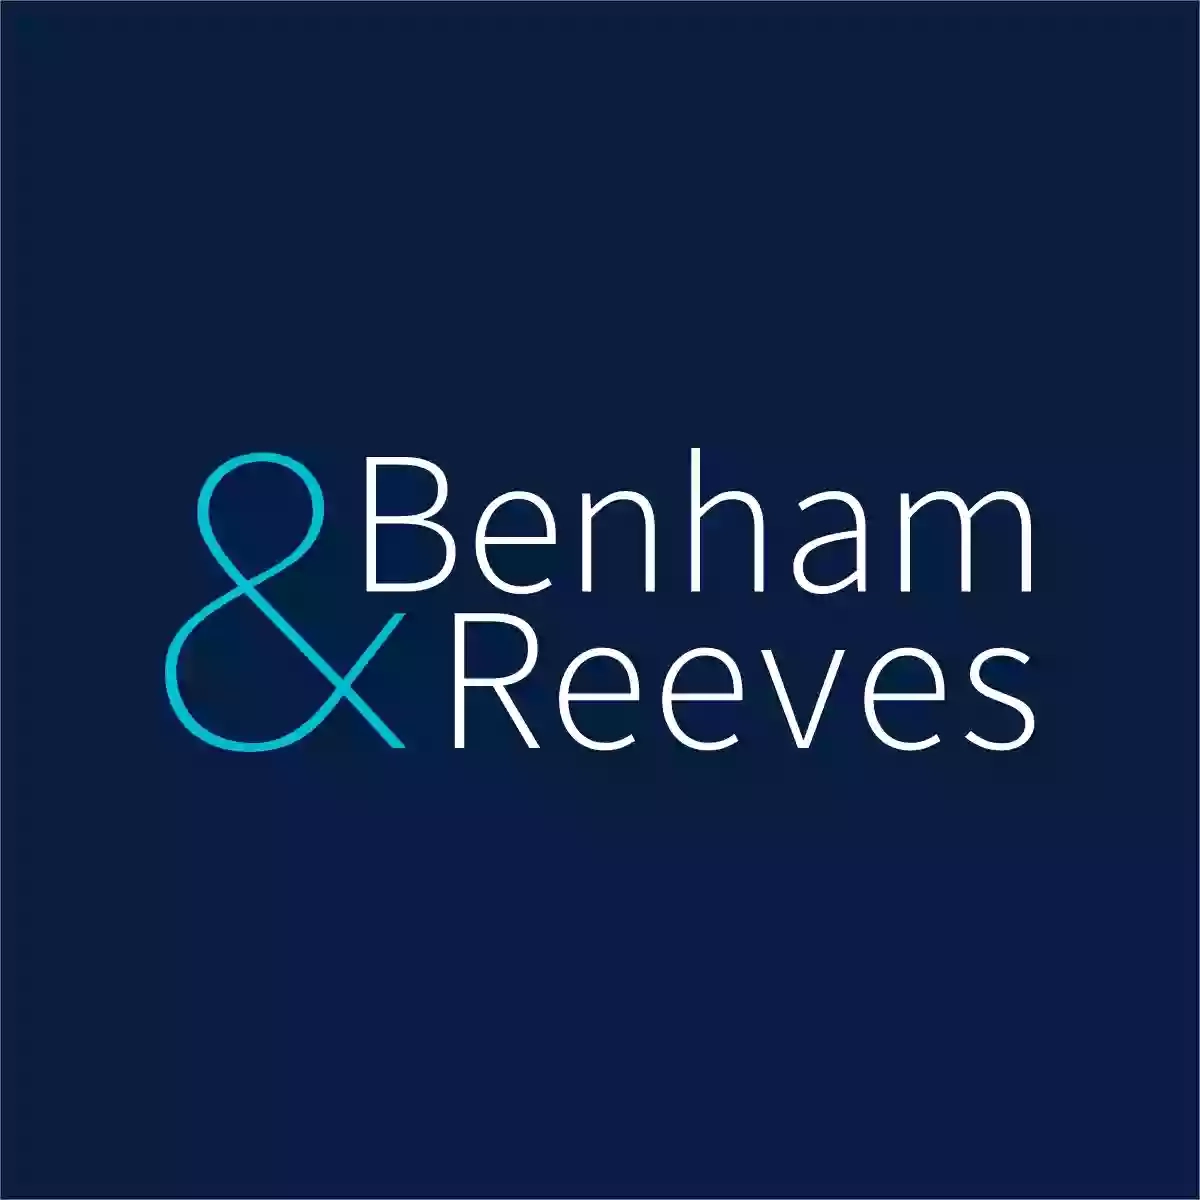 Benham & Reeves - Kensington Estate Agents